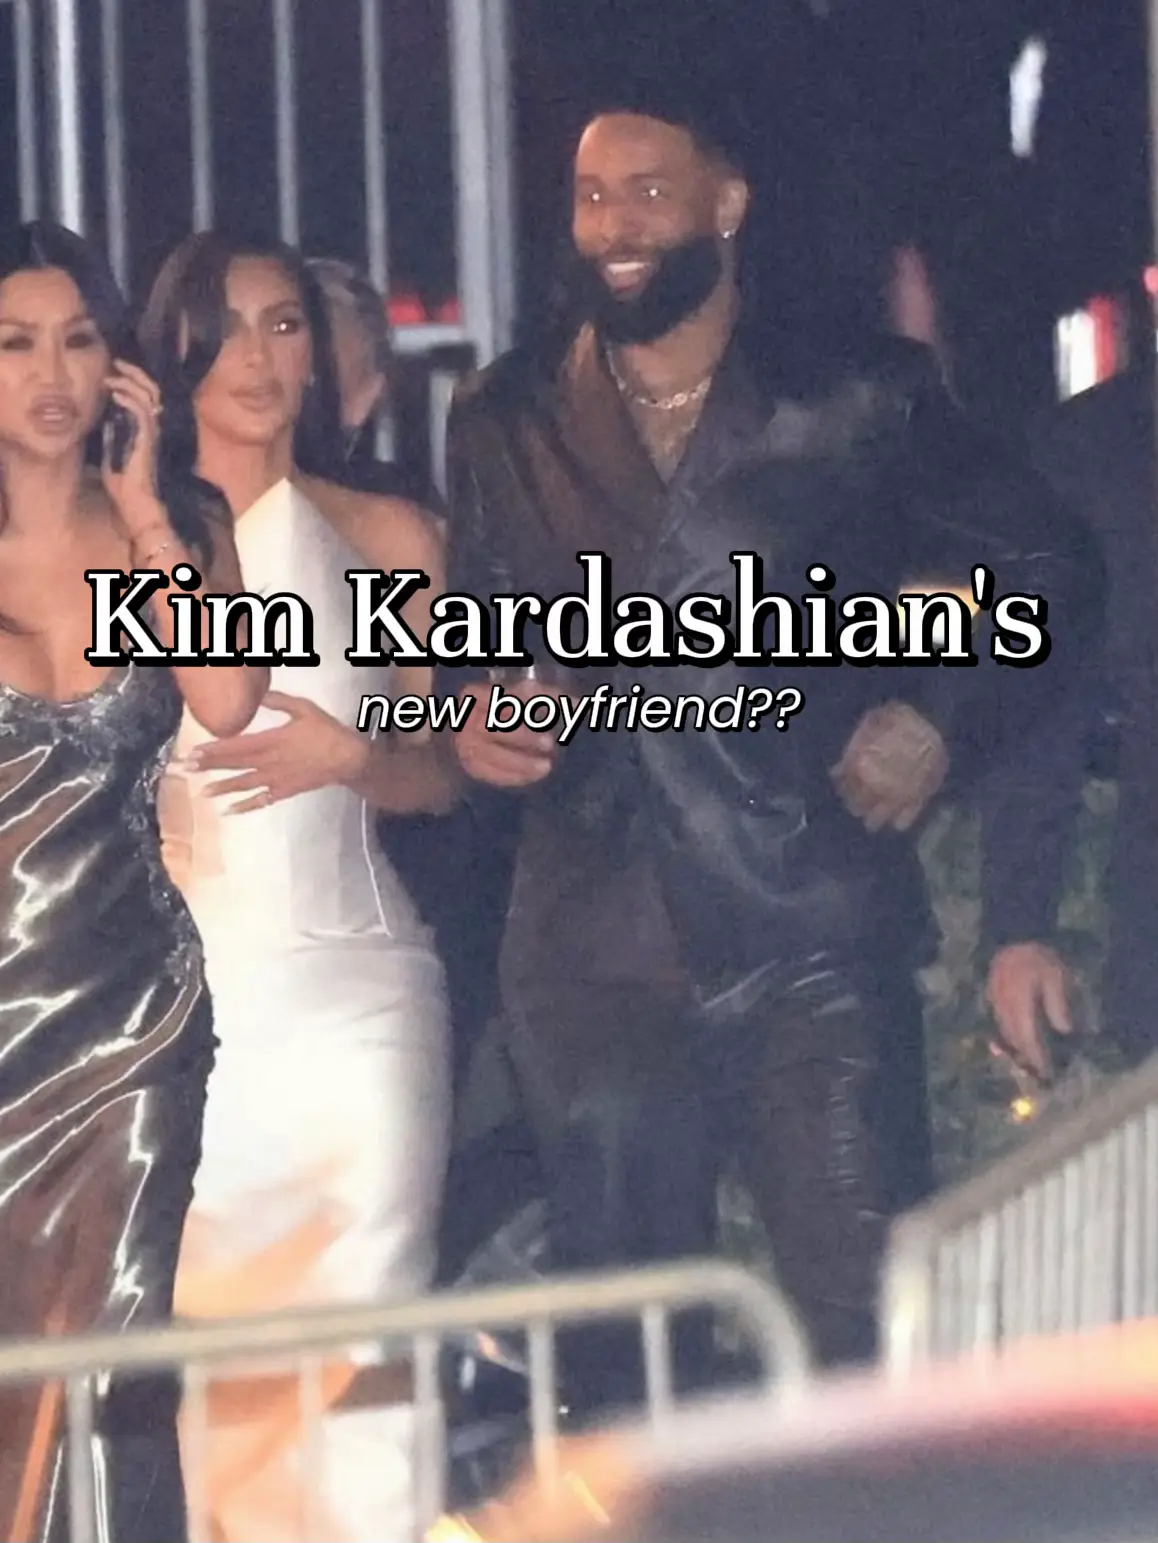 greenscreen #kimkardashian @SKIMS, Kimkardashian